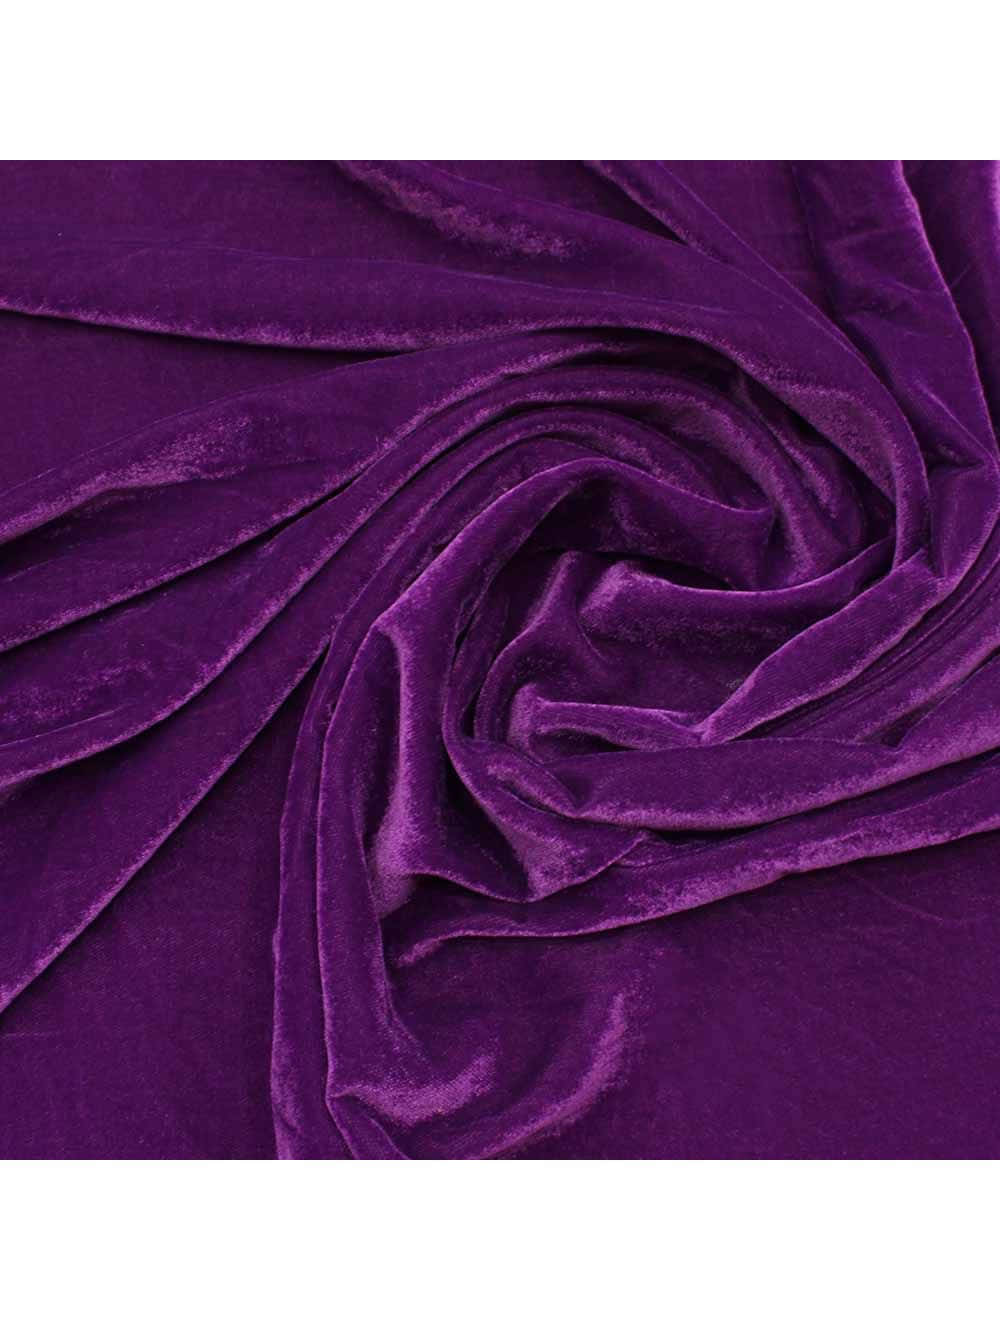 A luxurious velvety purple fabric draped across an elegant chair. Wallpaper